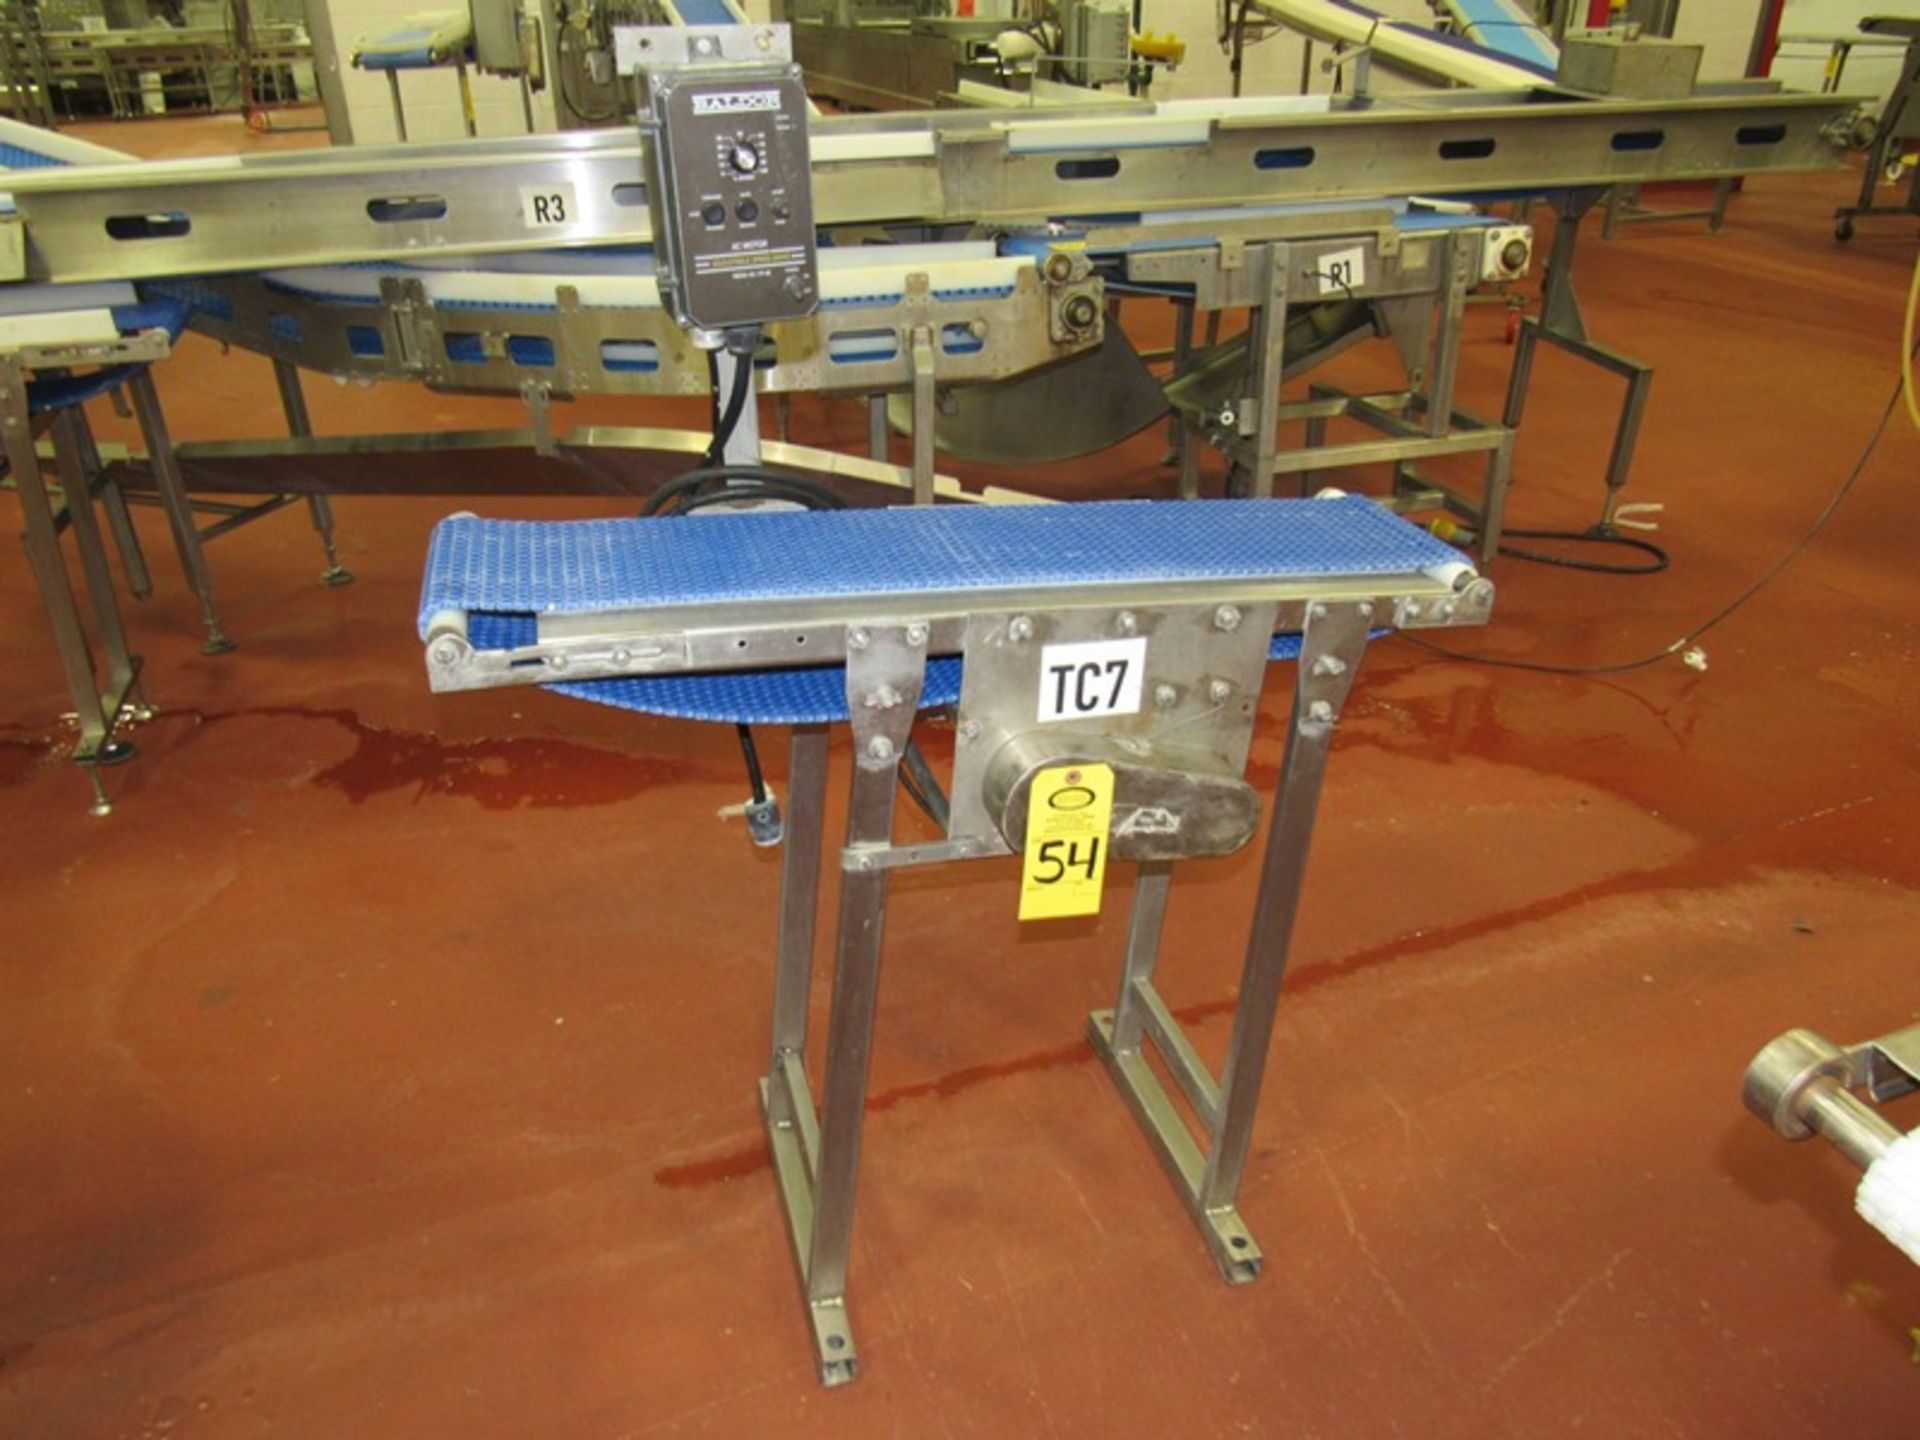 Stainless Steel Conveyor, 8" W X 40" L plastic belt, Baldor AC Motor, 110 VAC (Required Loading